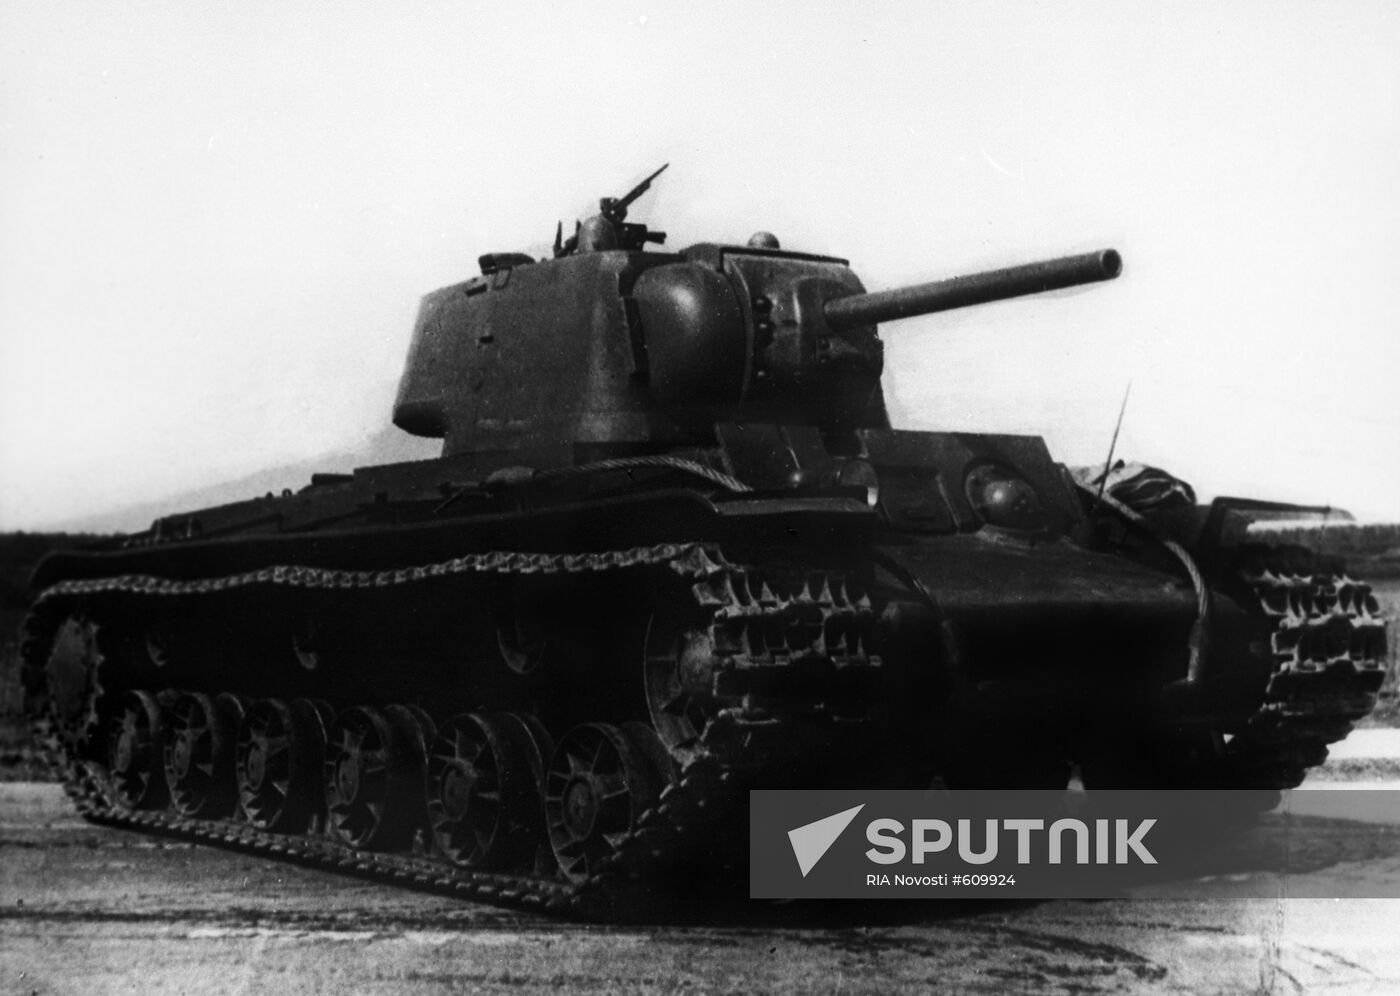 KV-1 tank